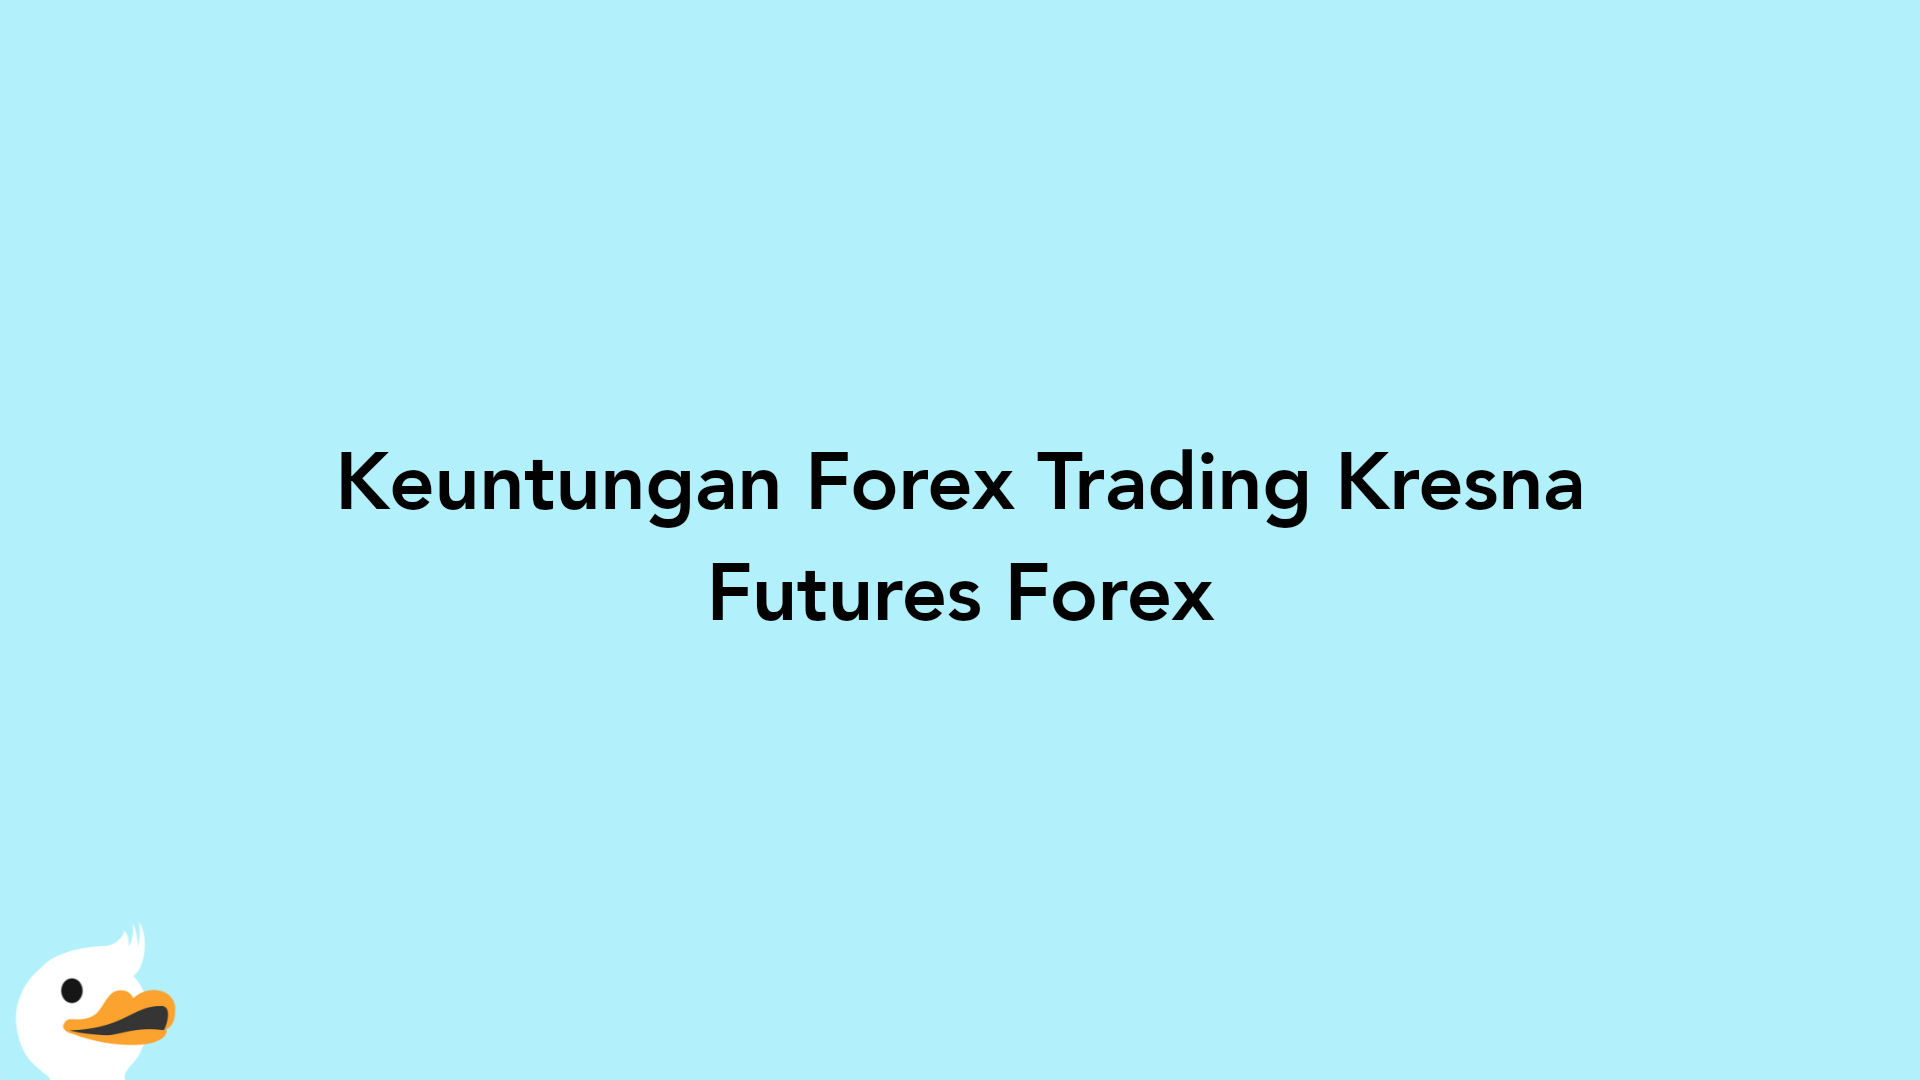 Keuntungan Forex Trading Kresna Futures Forex